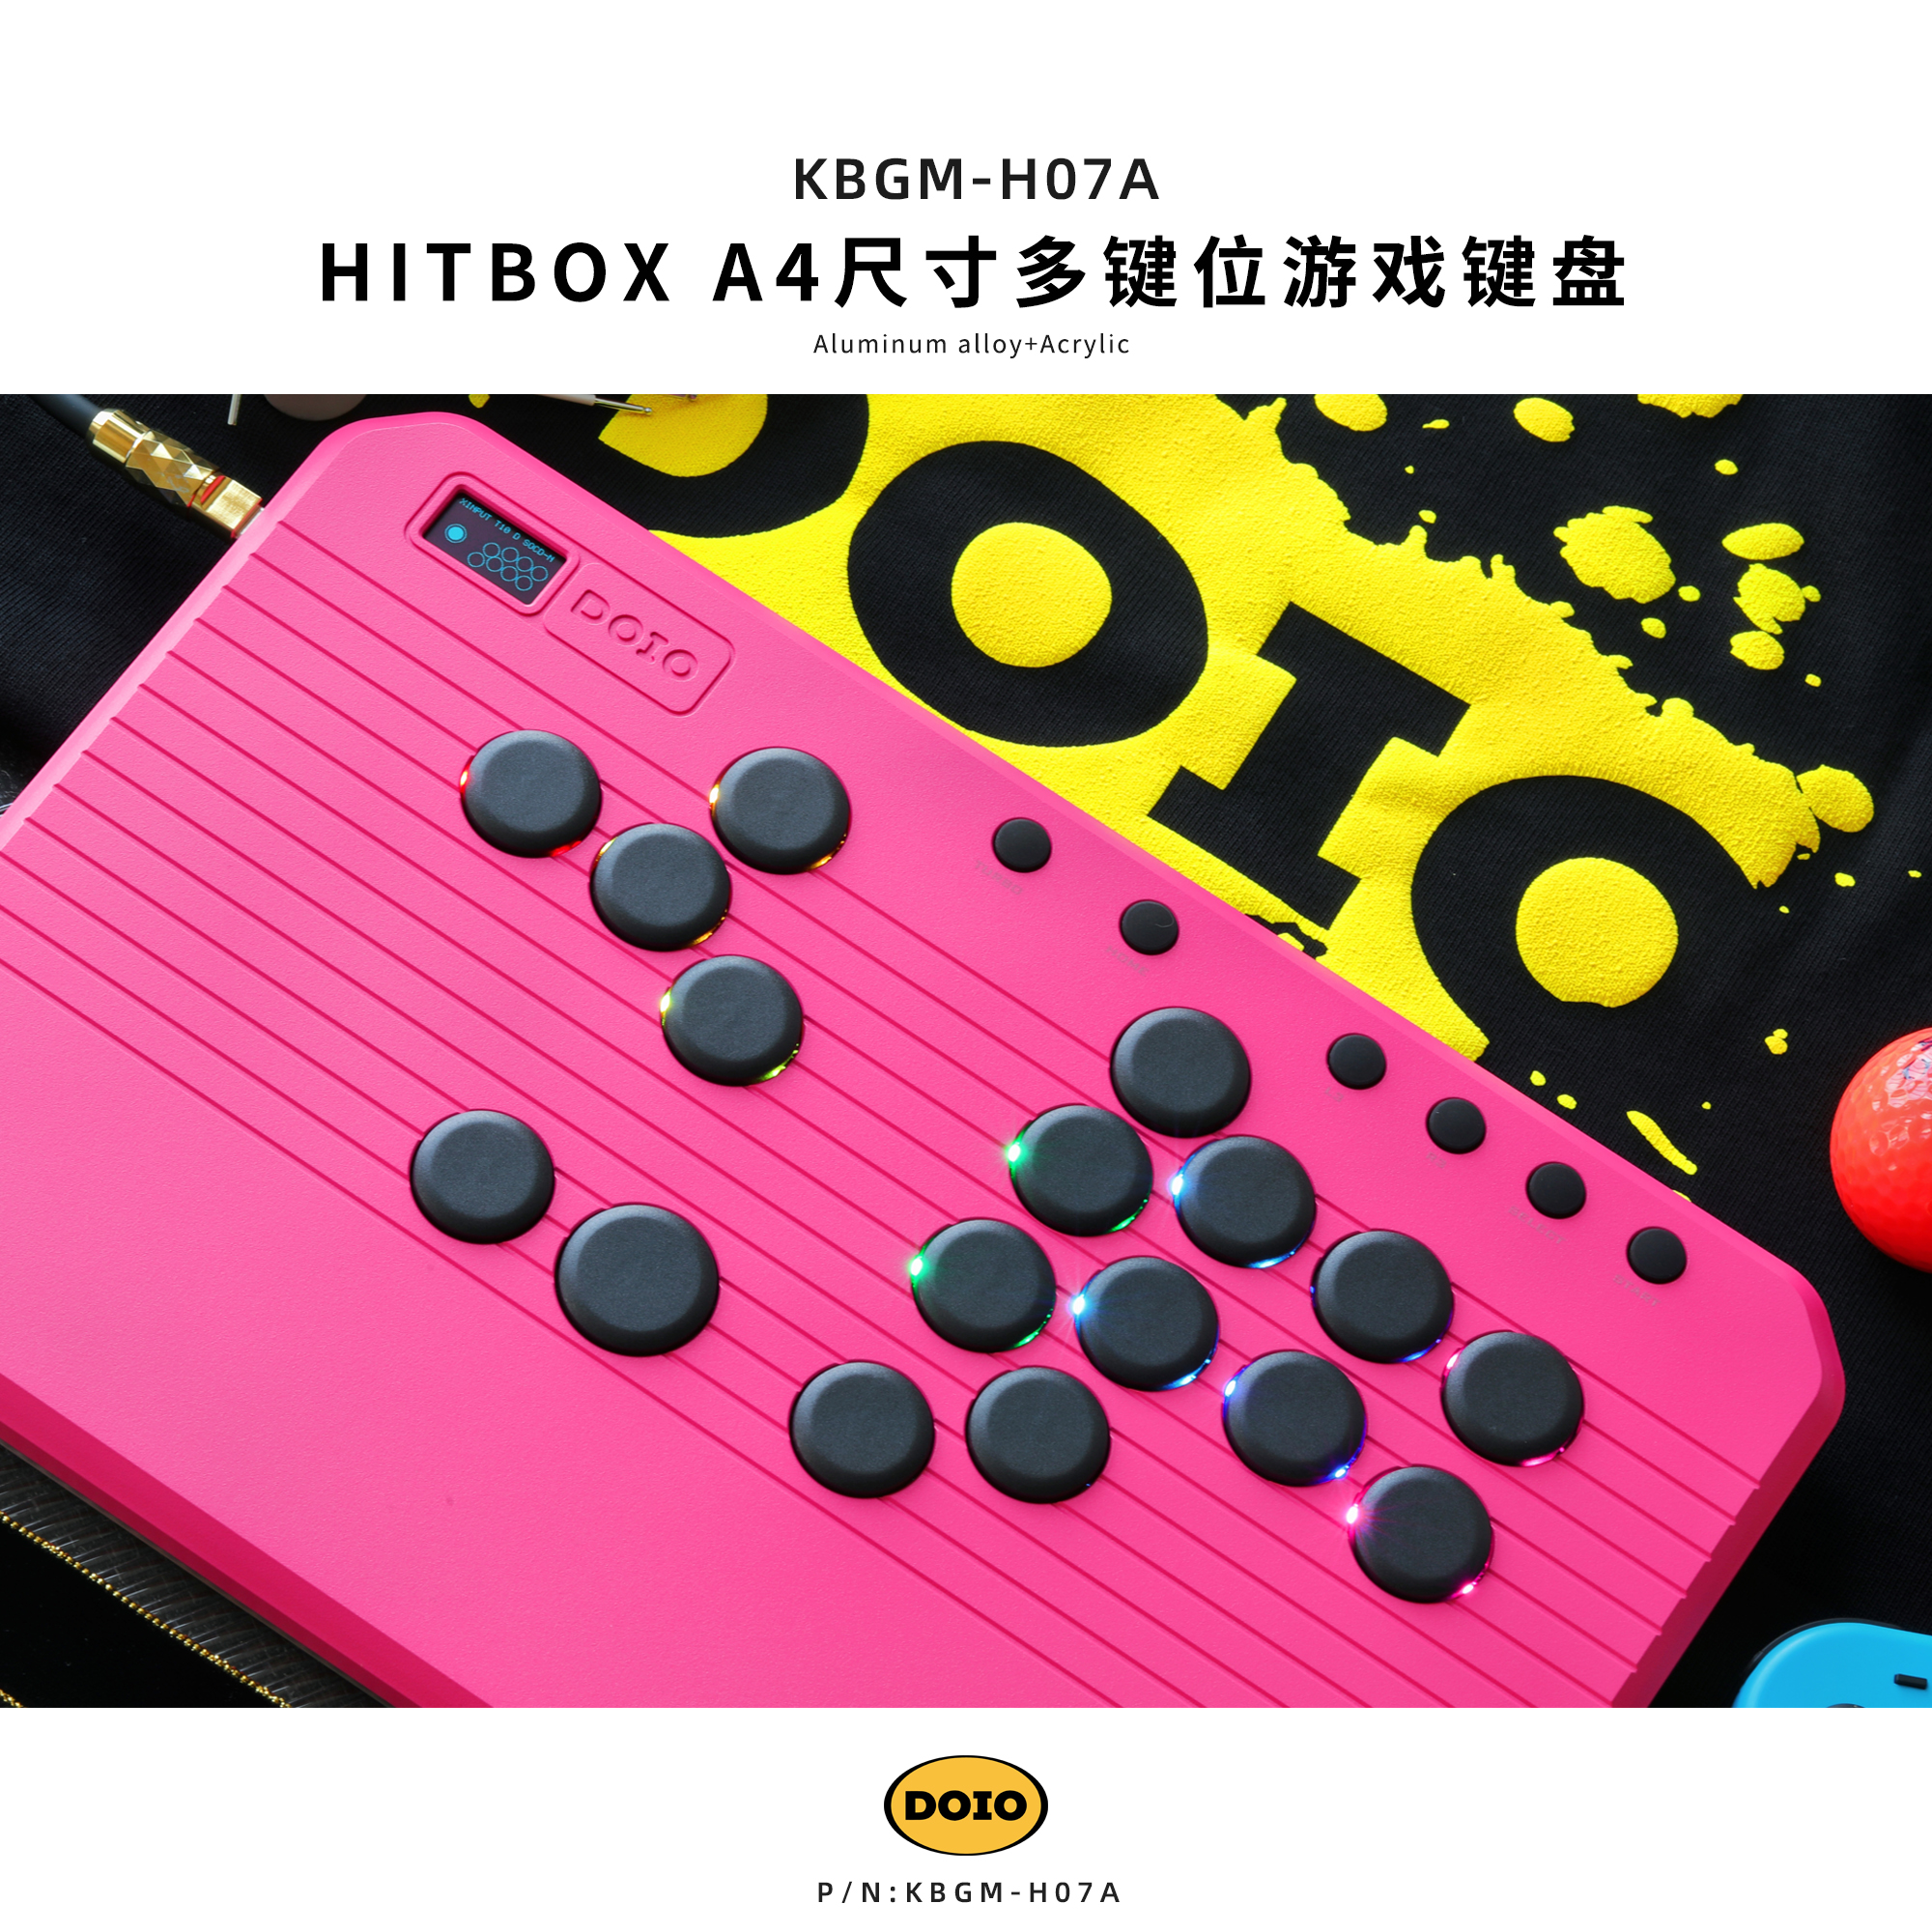 HITBOX 铝合金游戏键盘 KBGM-H07A